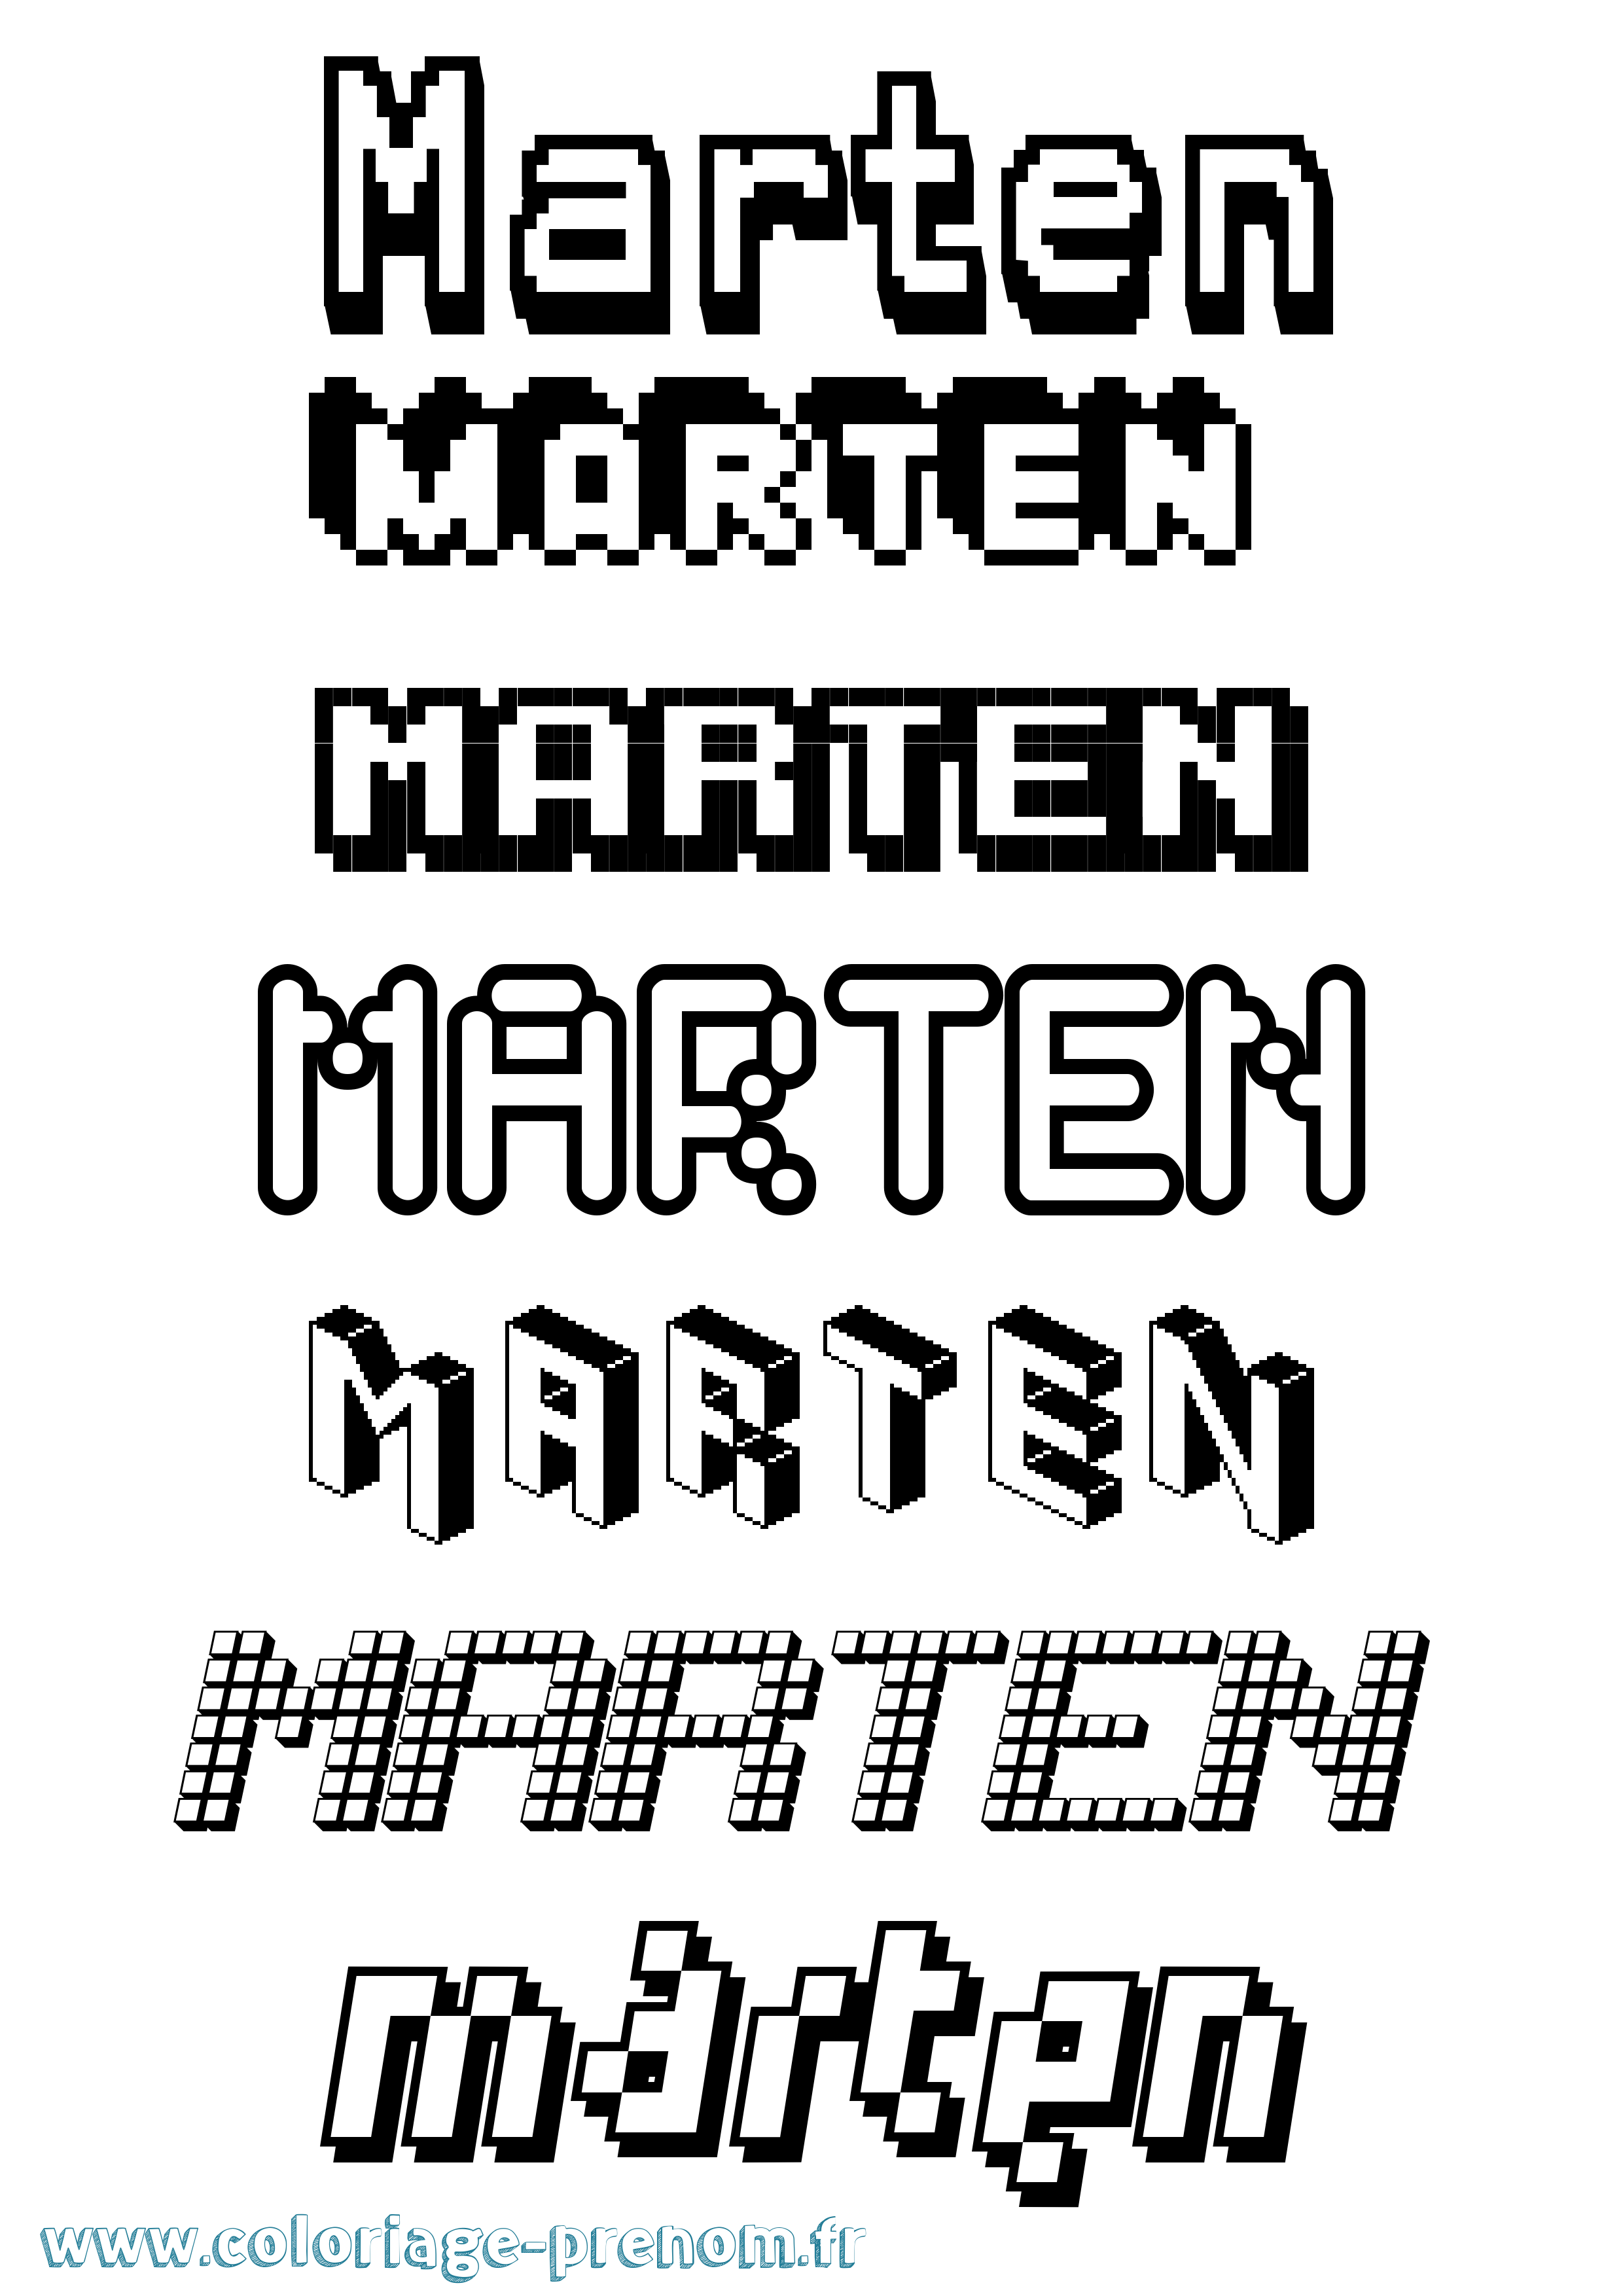 Coloriage prénom Marten Pixel